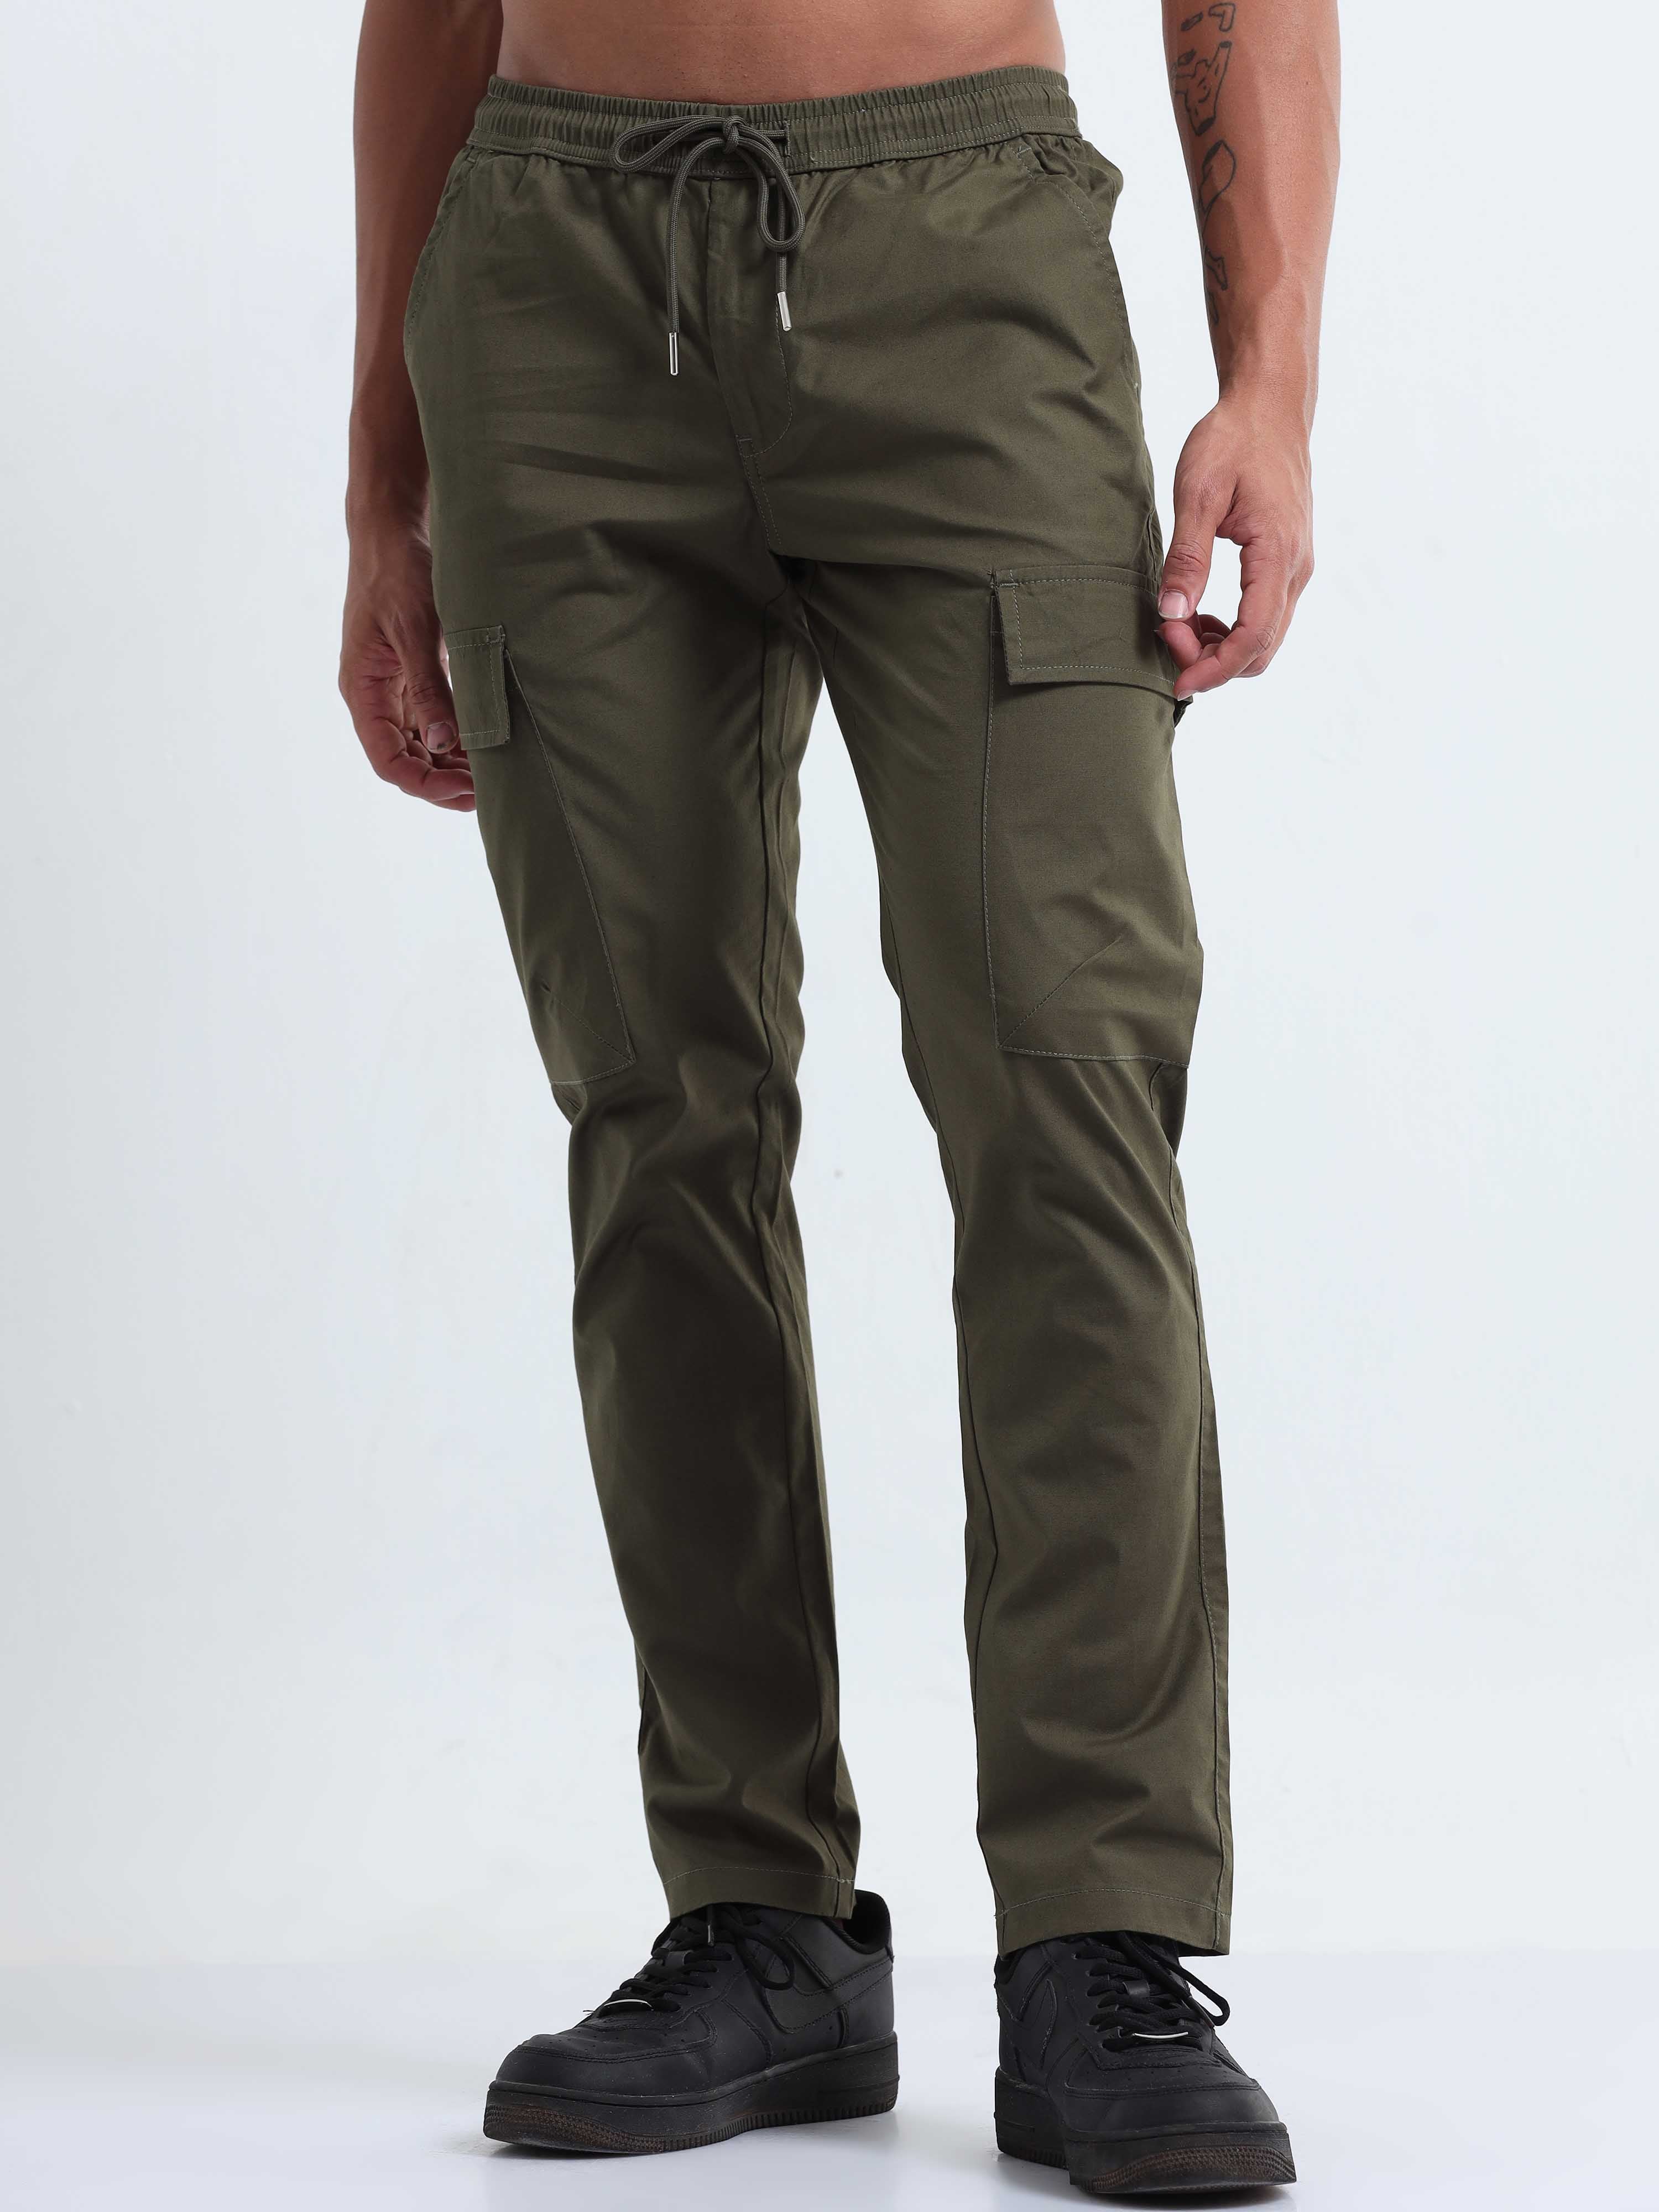 Trendy Olive Green Cargo Pants